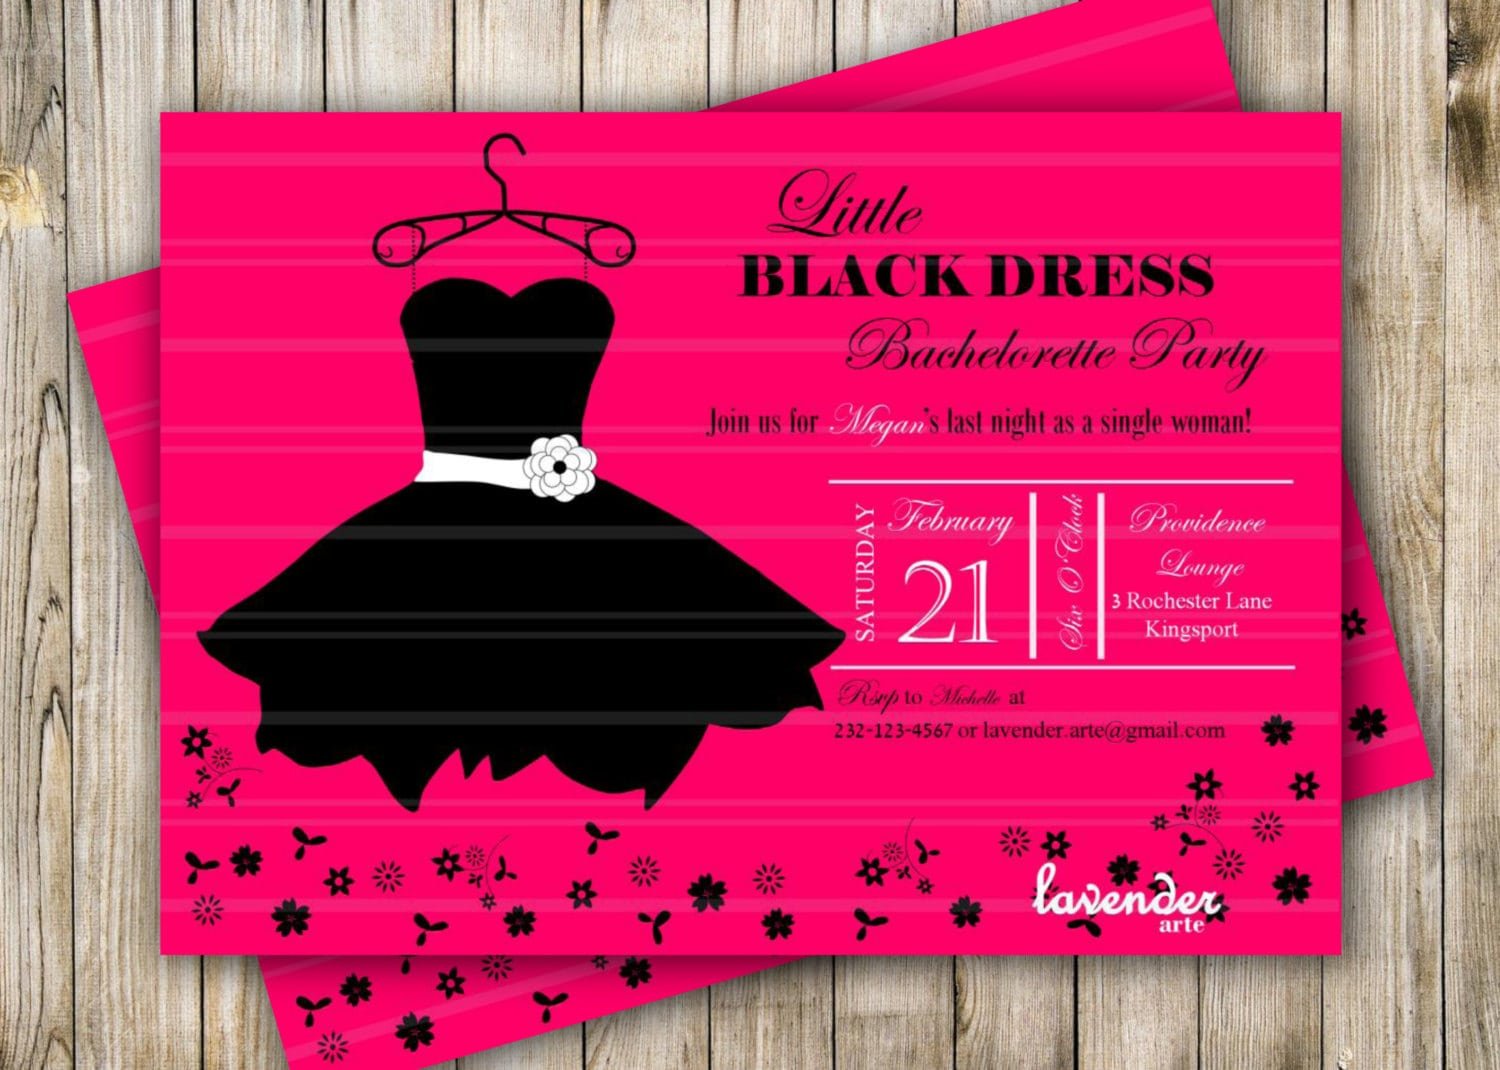 Bachelorette Party Invite Little Black Dress Bridal Shower